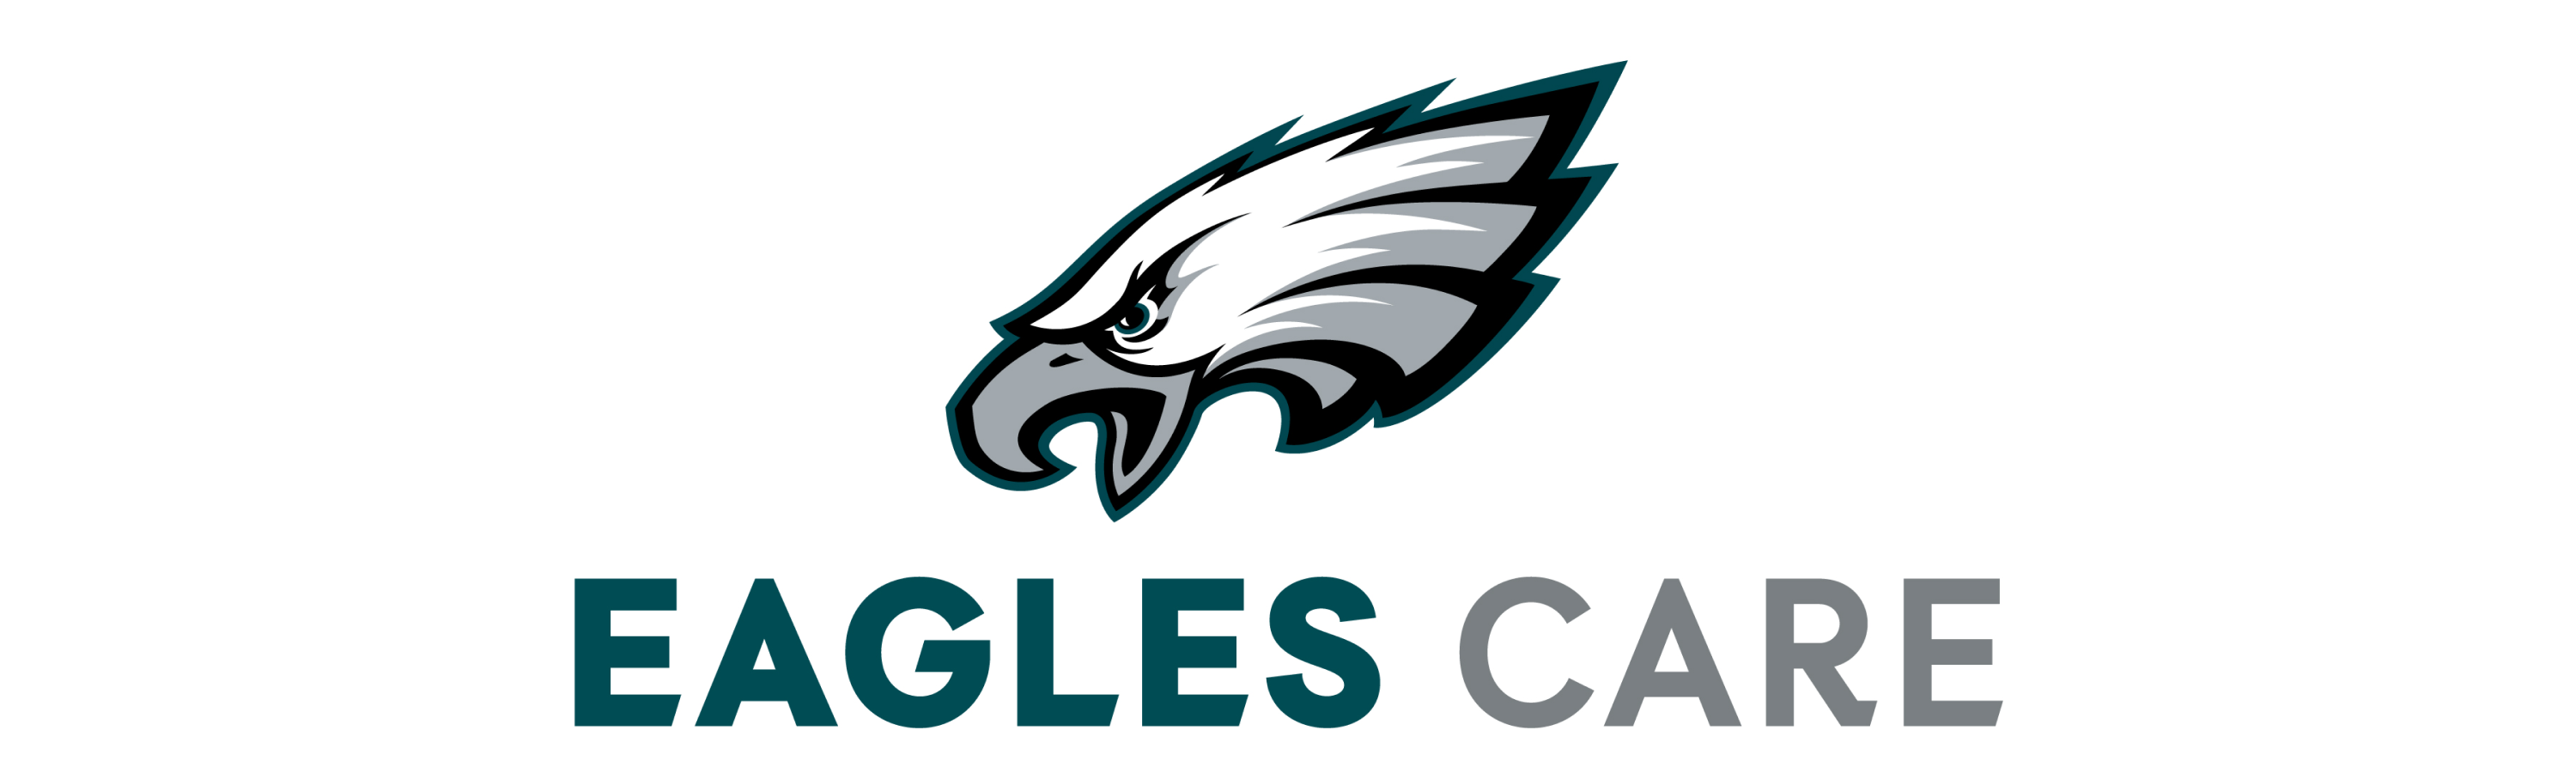 Philadelphia Eagles Care